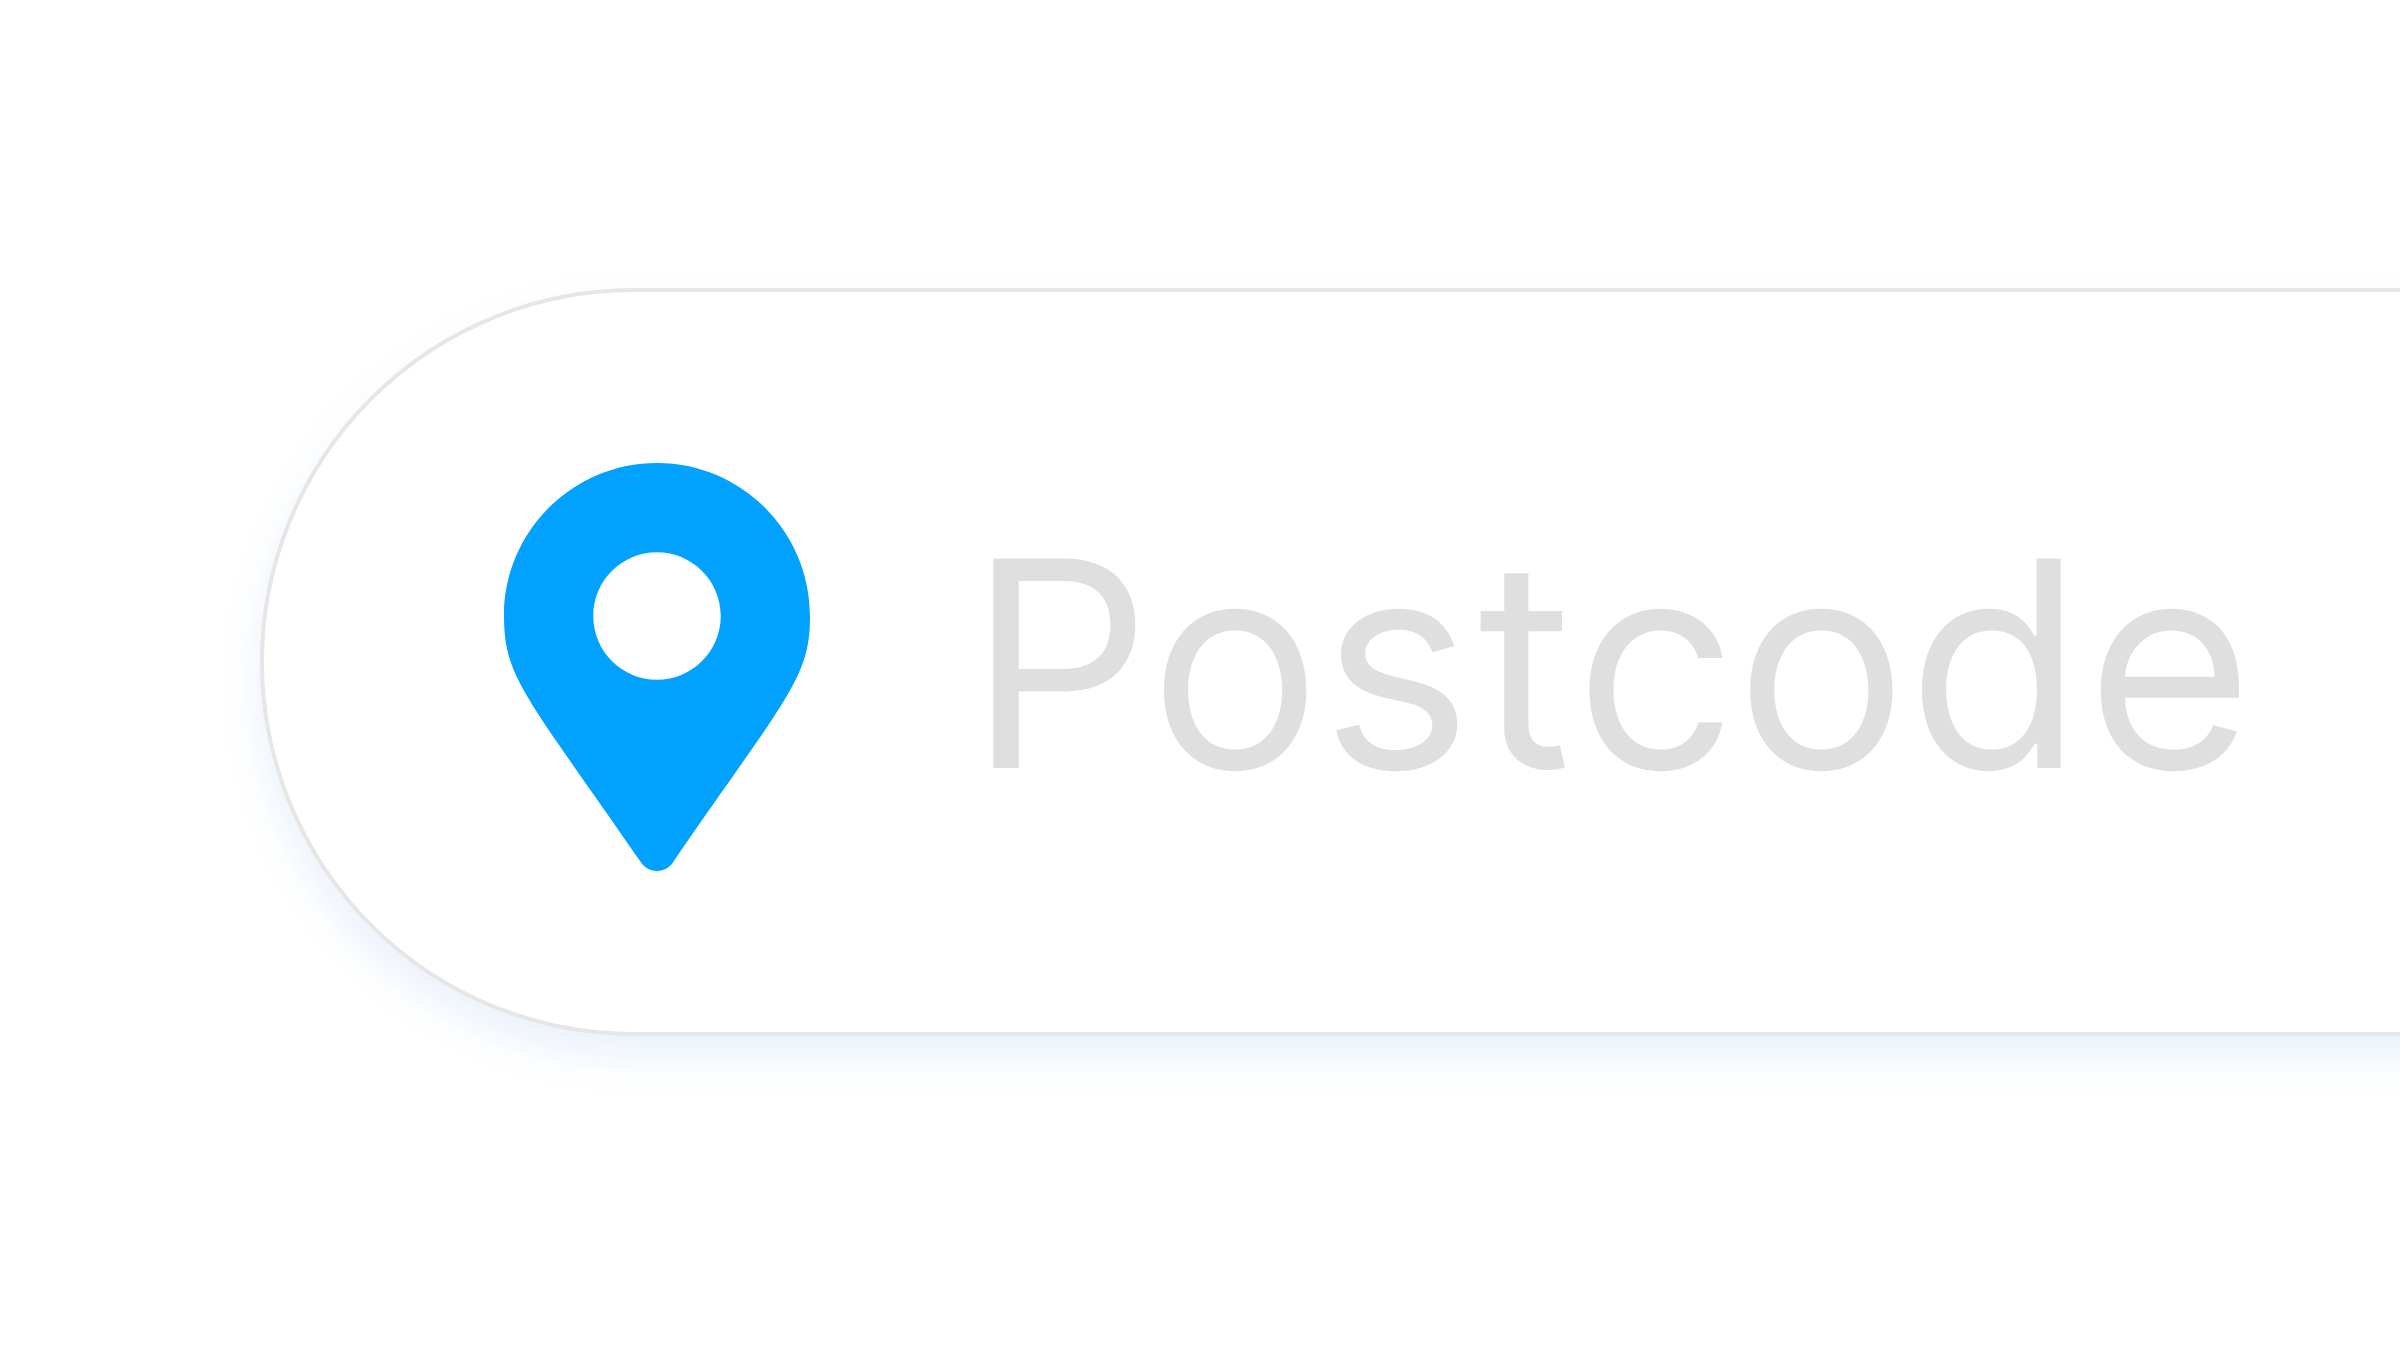 Postcode integration